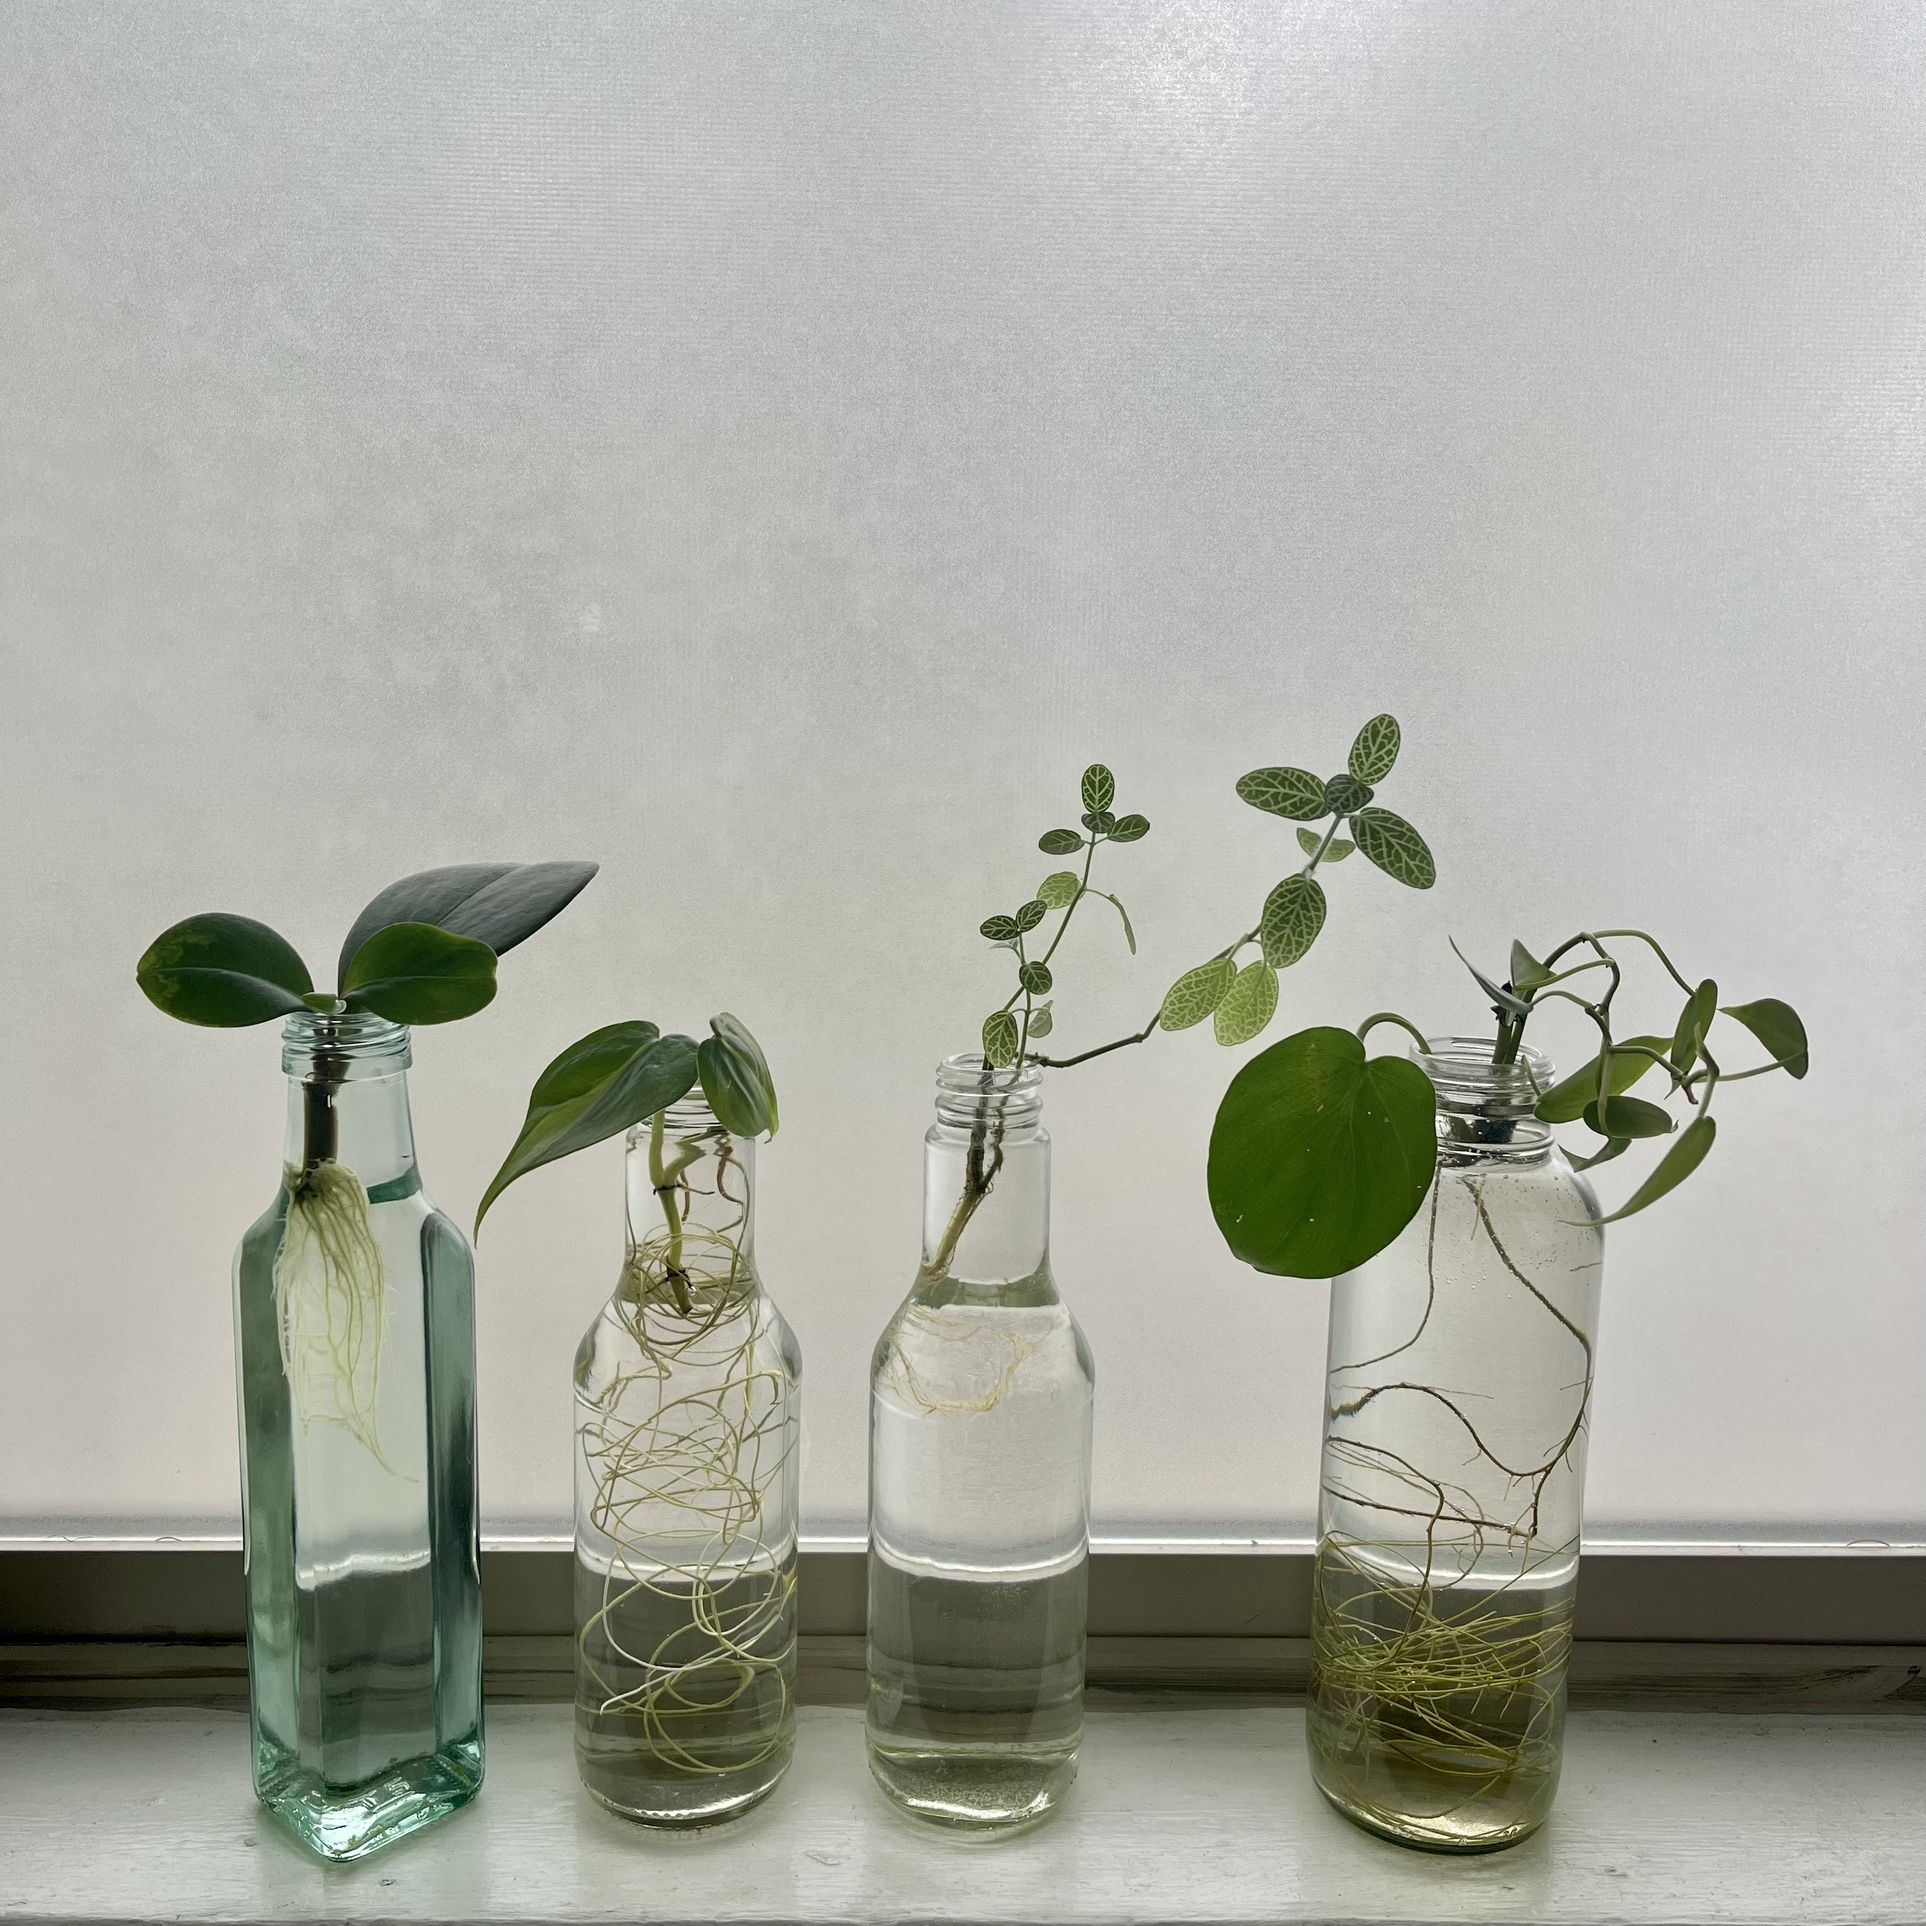 Propagated Plantings in Bottles